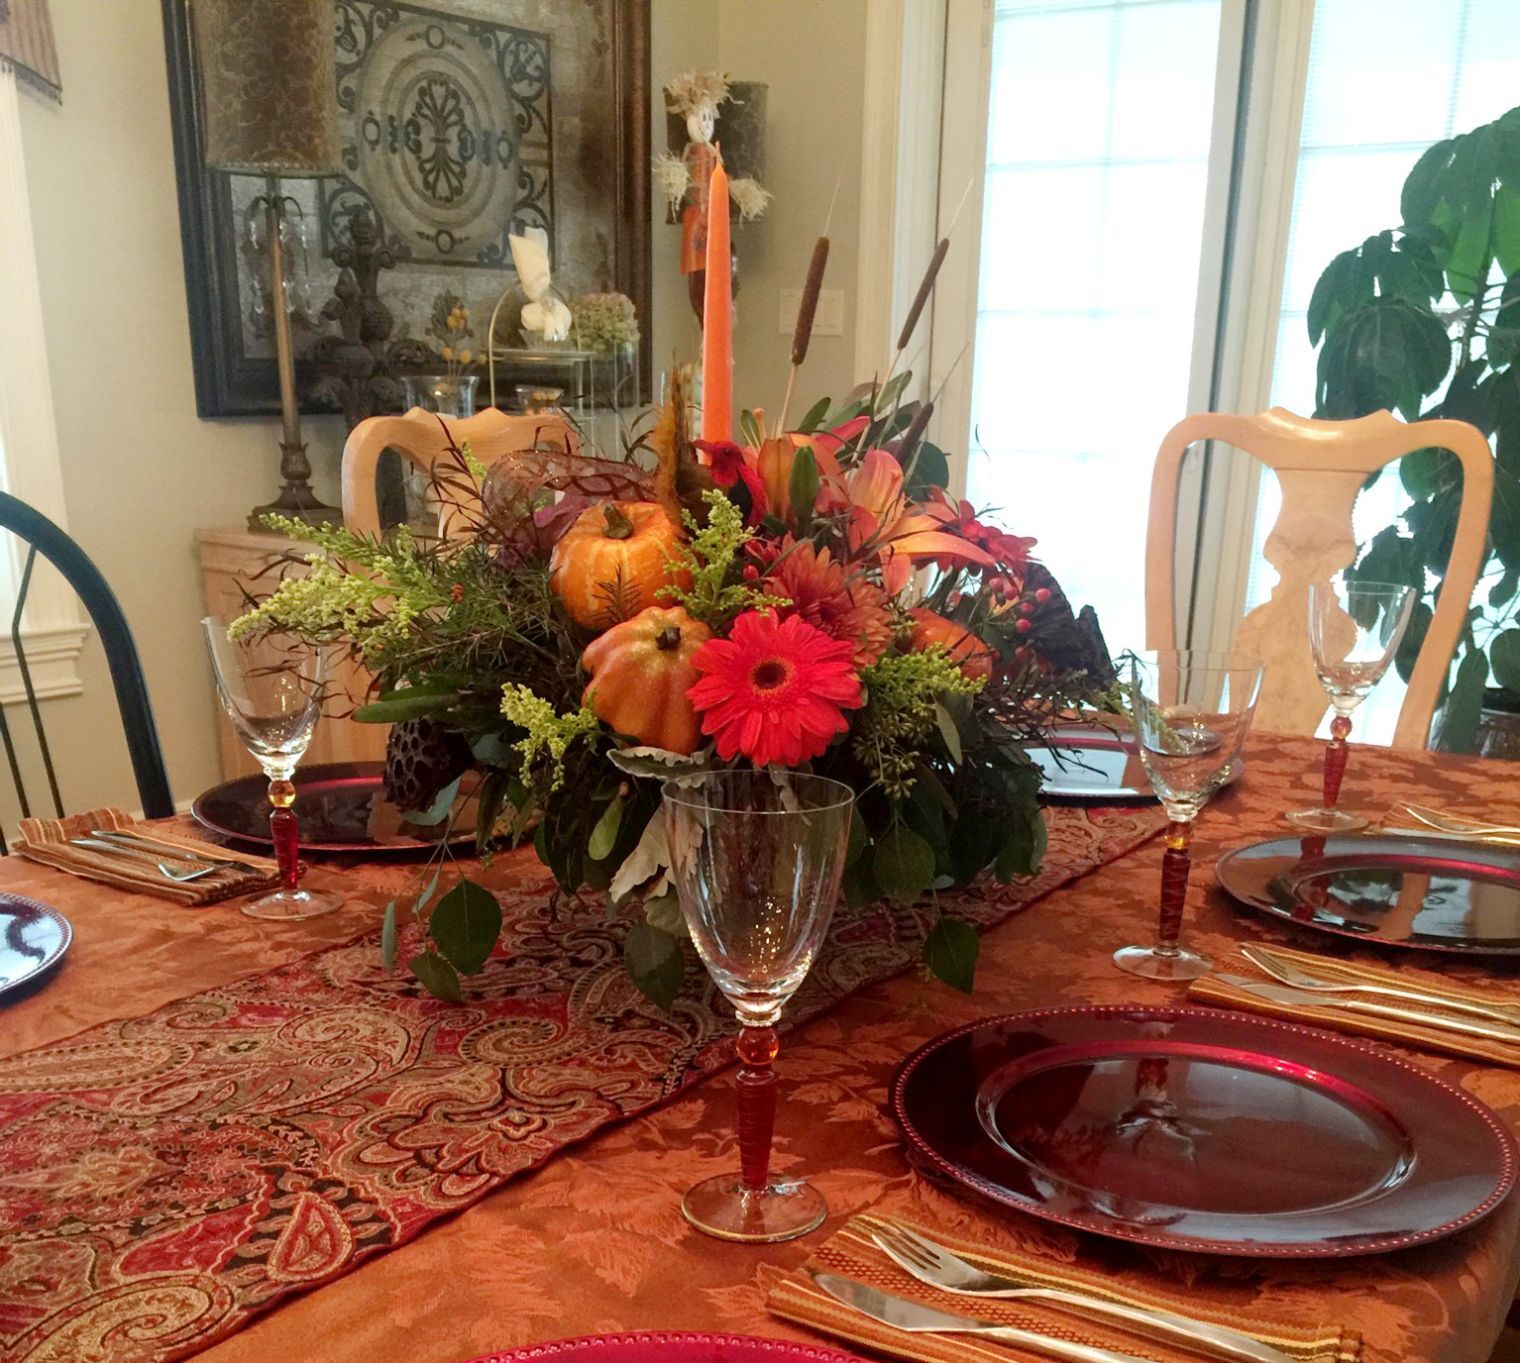 Bronzes, burgundies, fall finery highlight this year's Thanksgiving flowers